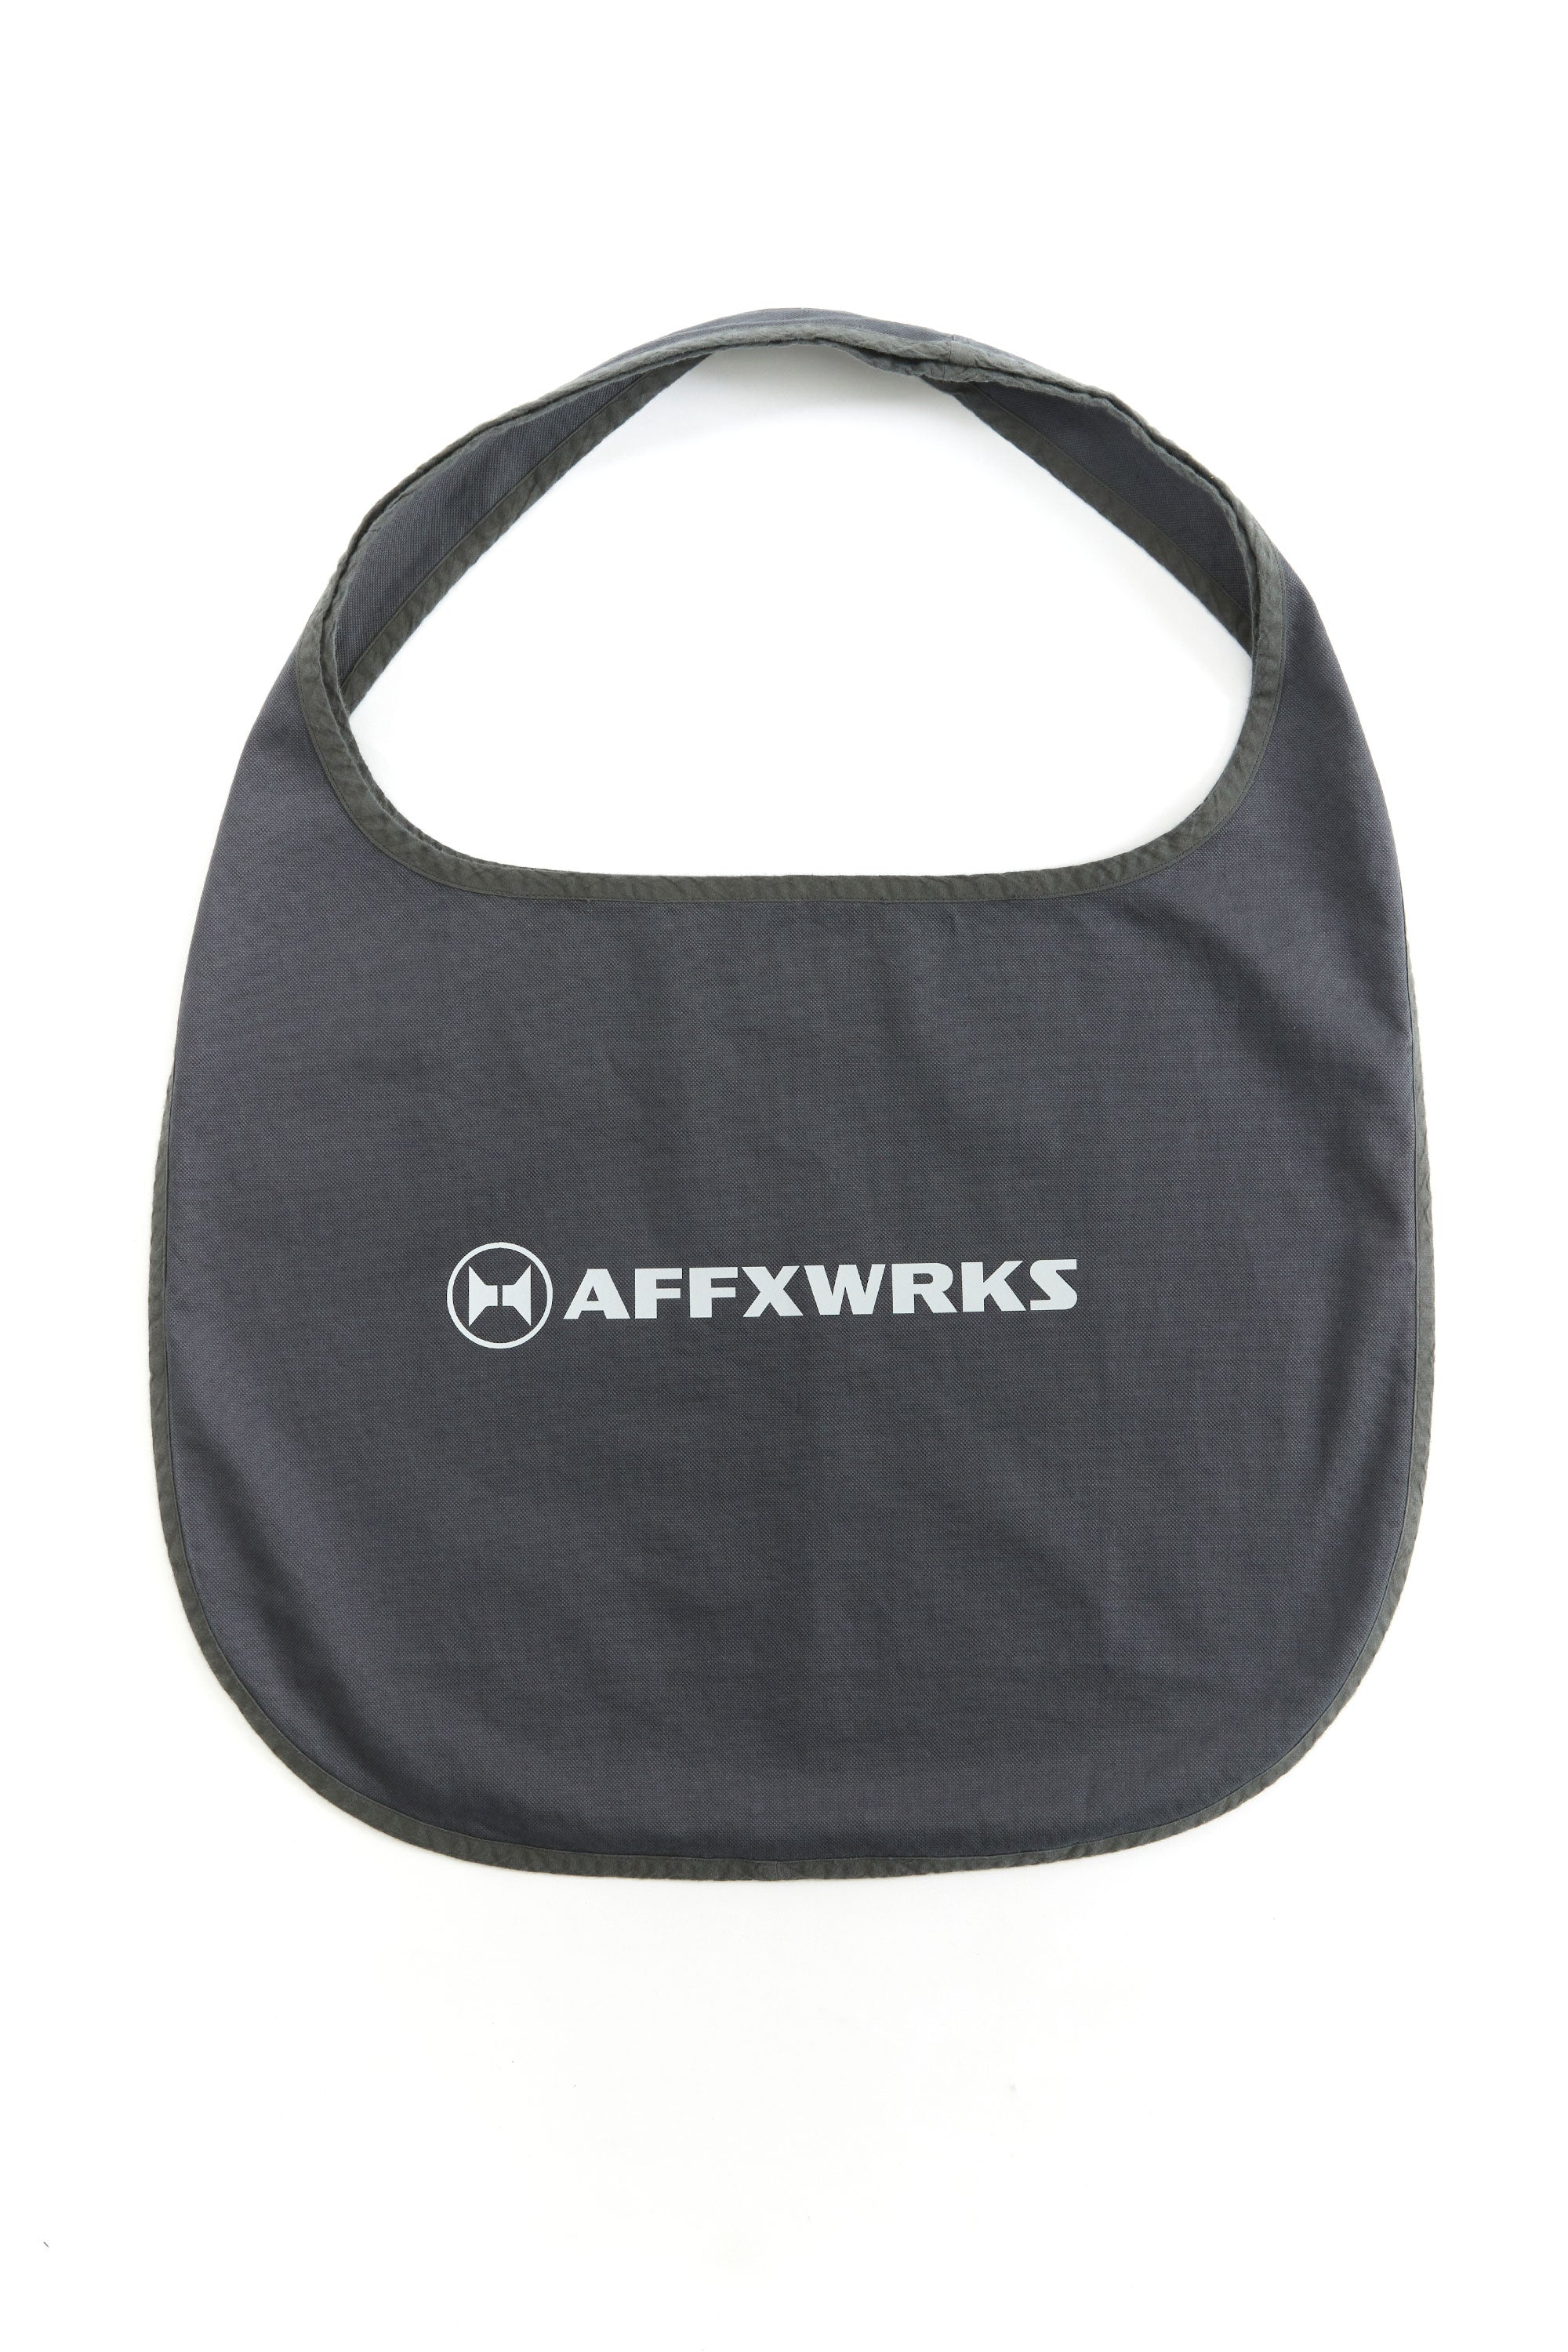 AFFXWRKS - CIRCULAR BAG